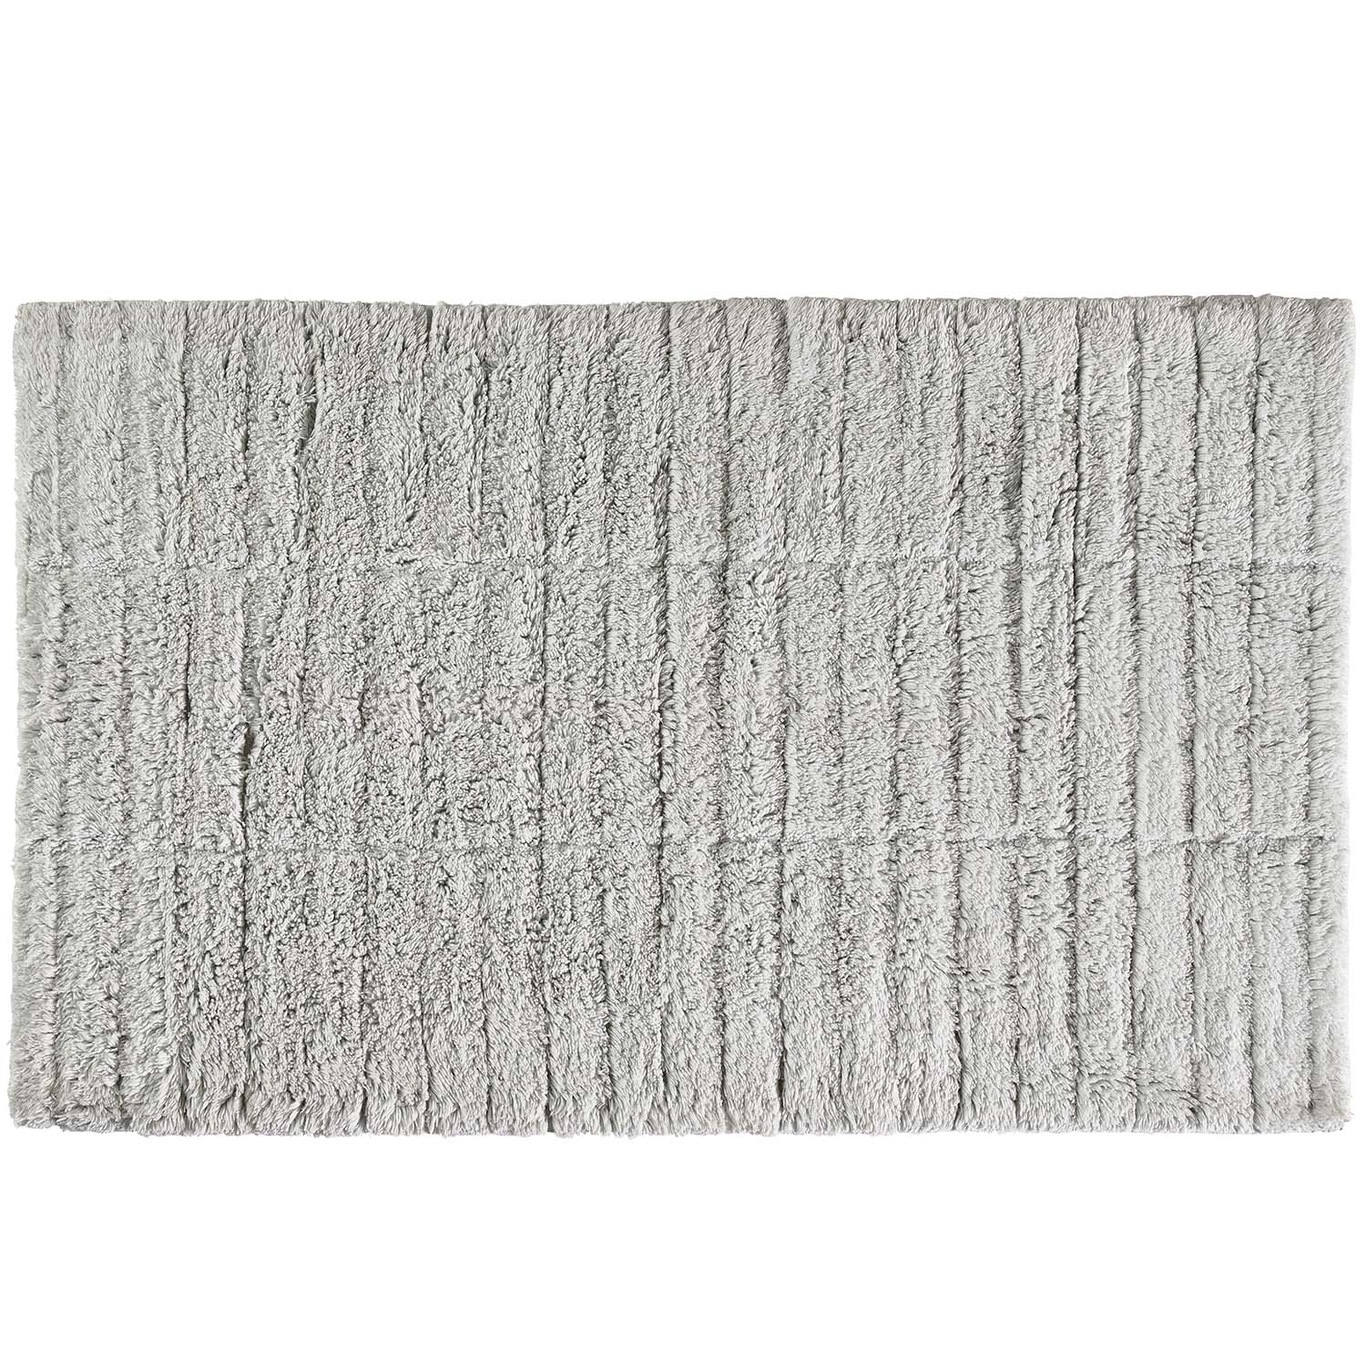 Tiles Bathroom Rug 50x80 cm, Soft Grey